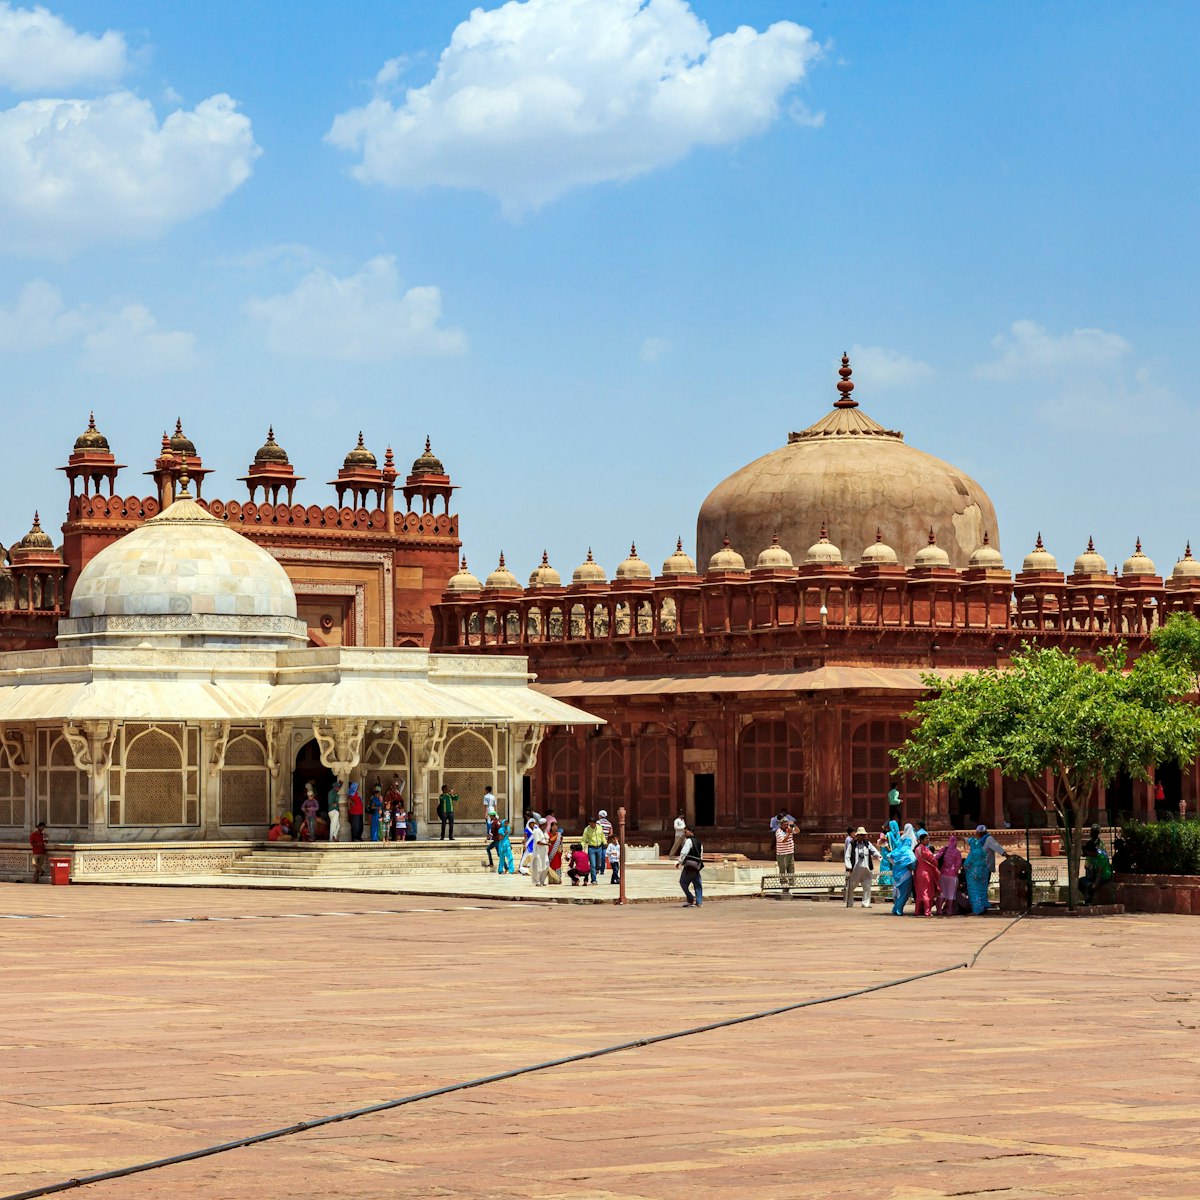 Agra, Uttar Pradesh, India - April 15, 2013: The Palace of Fatehpur Sikri in India